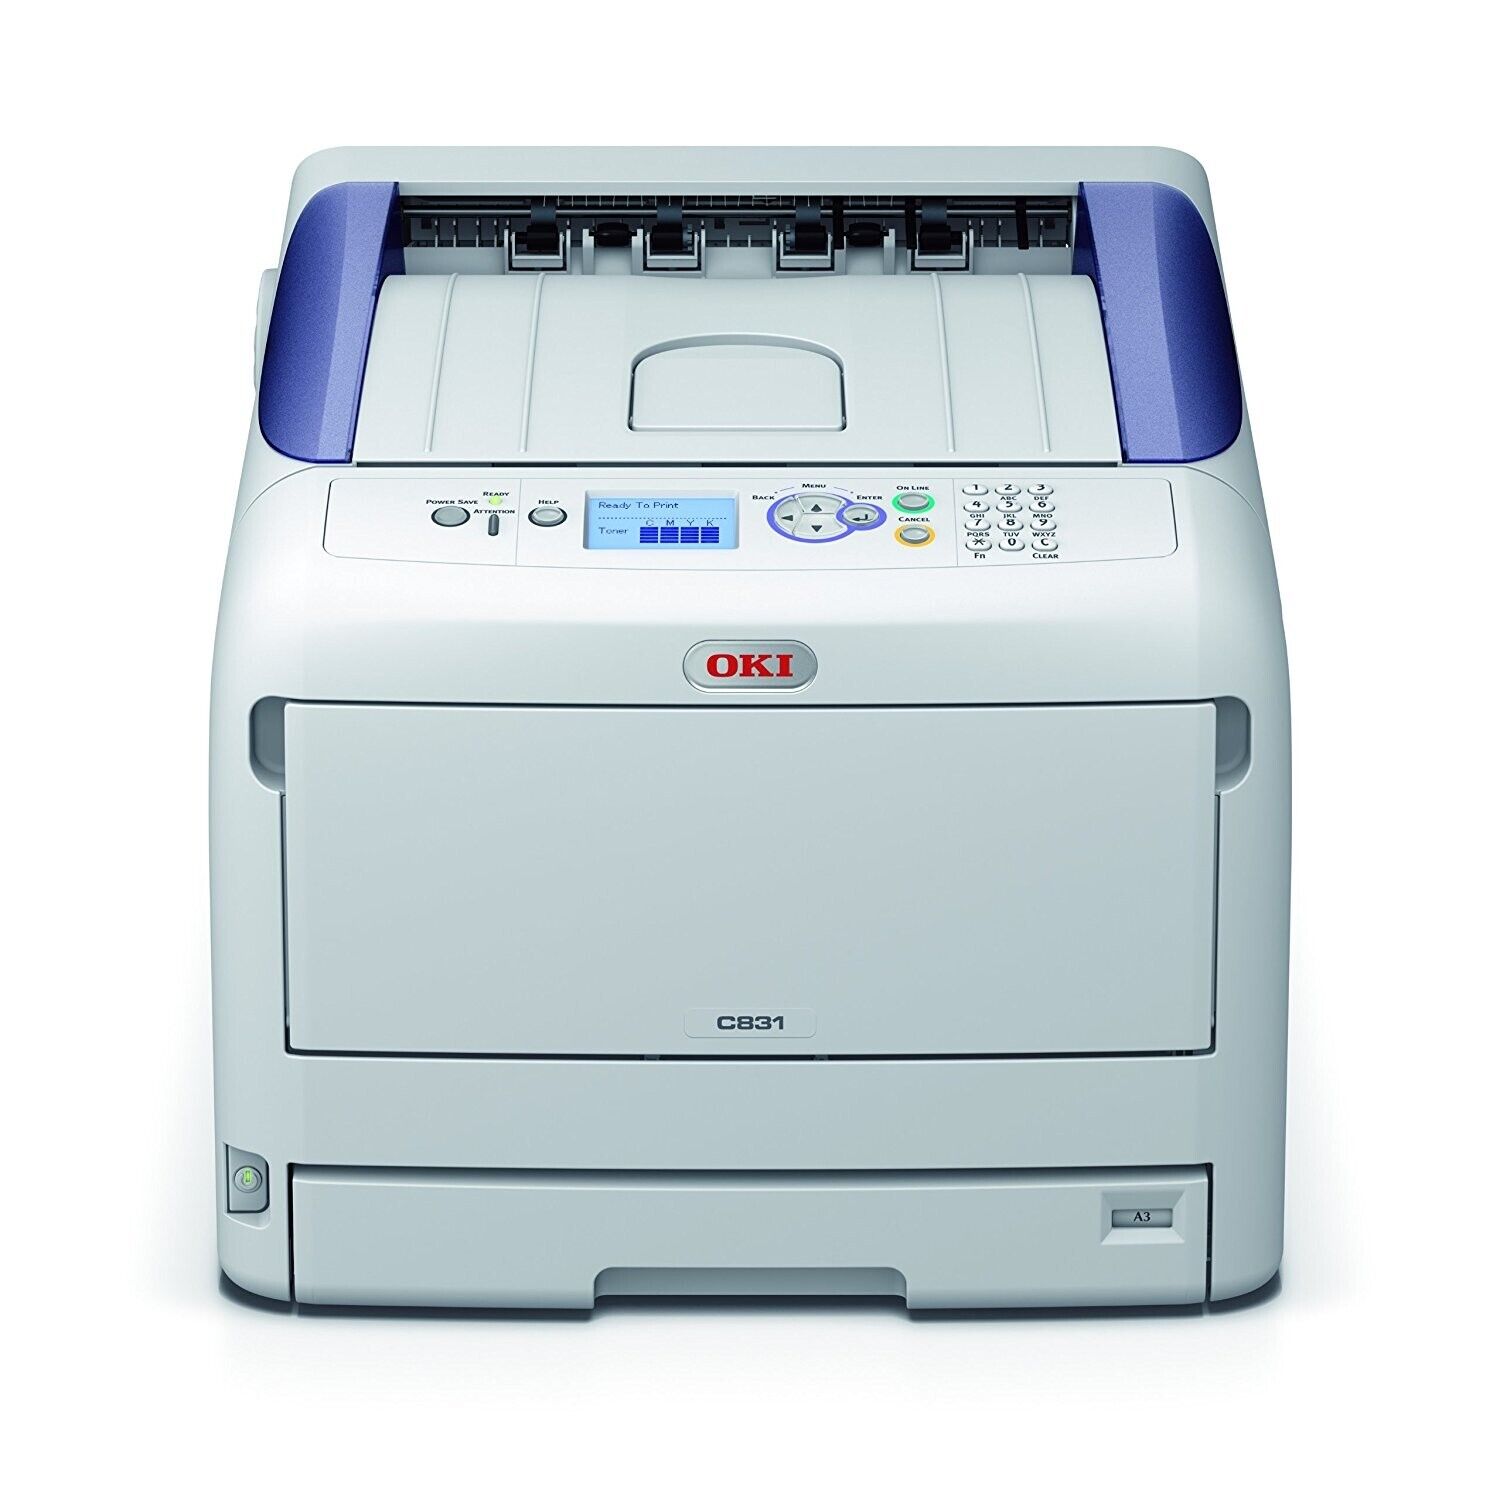 01318803 OKI 831N A4 Colour Laser Printer - Refurbished